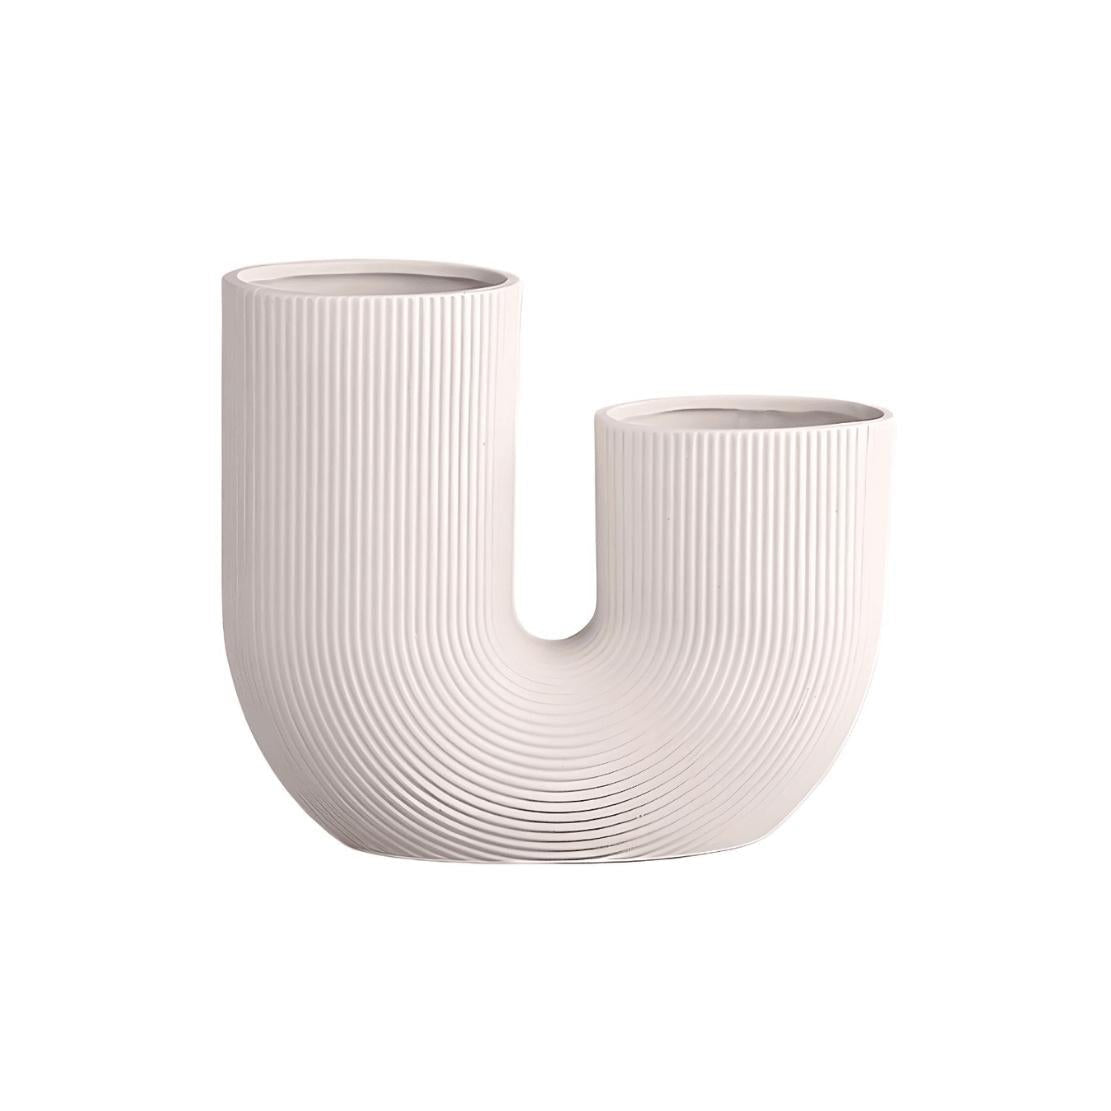 Pink, ceramic U shape vase